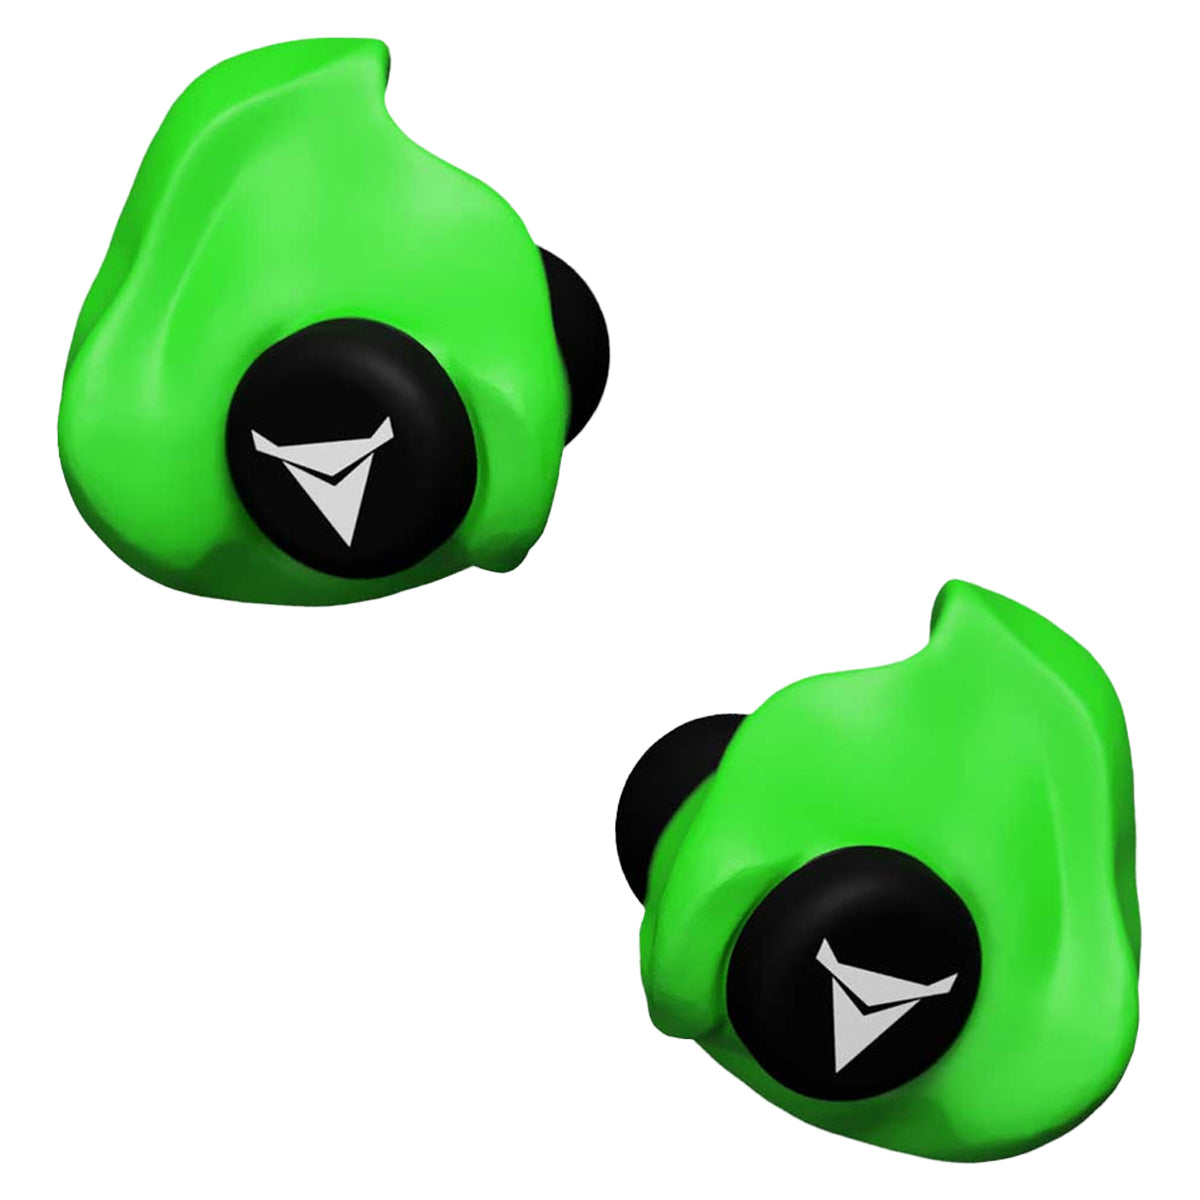 Decibullz Custom Molded Earplugs in Green by GOHUNT | Decibullz - GOHUNT Shop